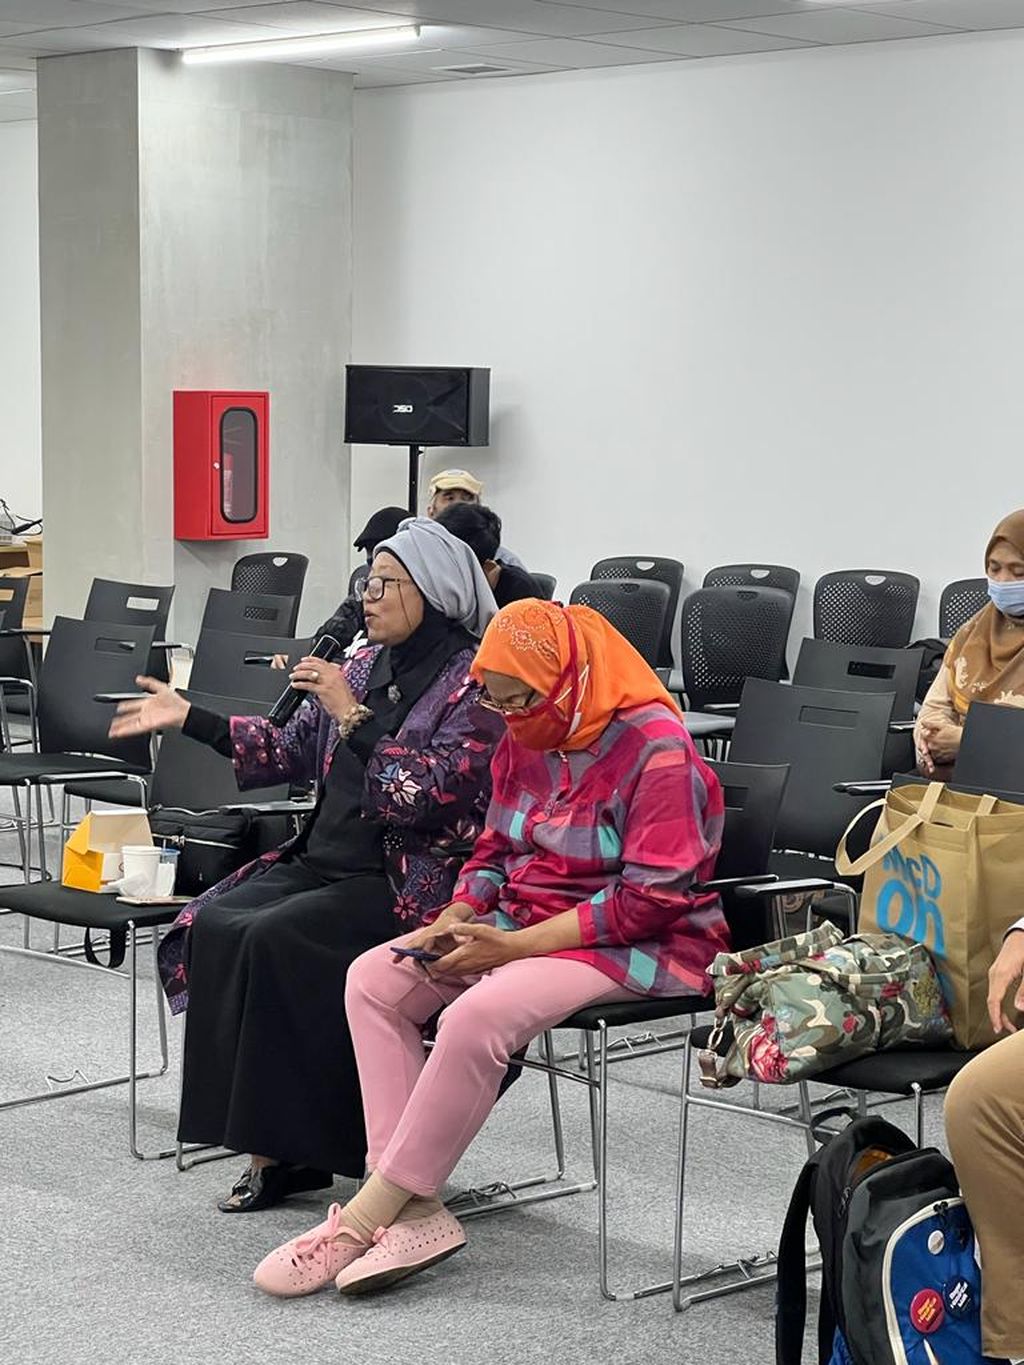 Putri Tabrani, Amie Primarni hadir dan berbicara dalam diskusi Forum Bahasa Media Massa (FBMM) di aula Pusat Dokumentasi Sastra HB Jassin, Taman Ismail Marzuki, Jakarta, Jumat (5/8/2022).